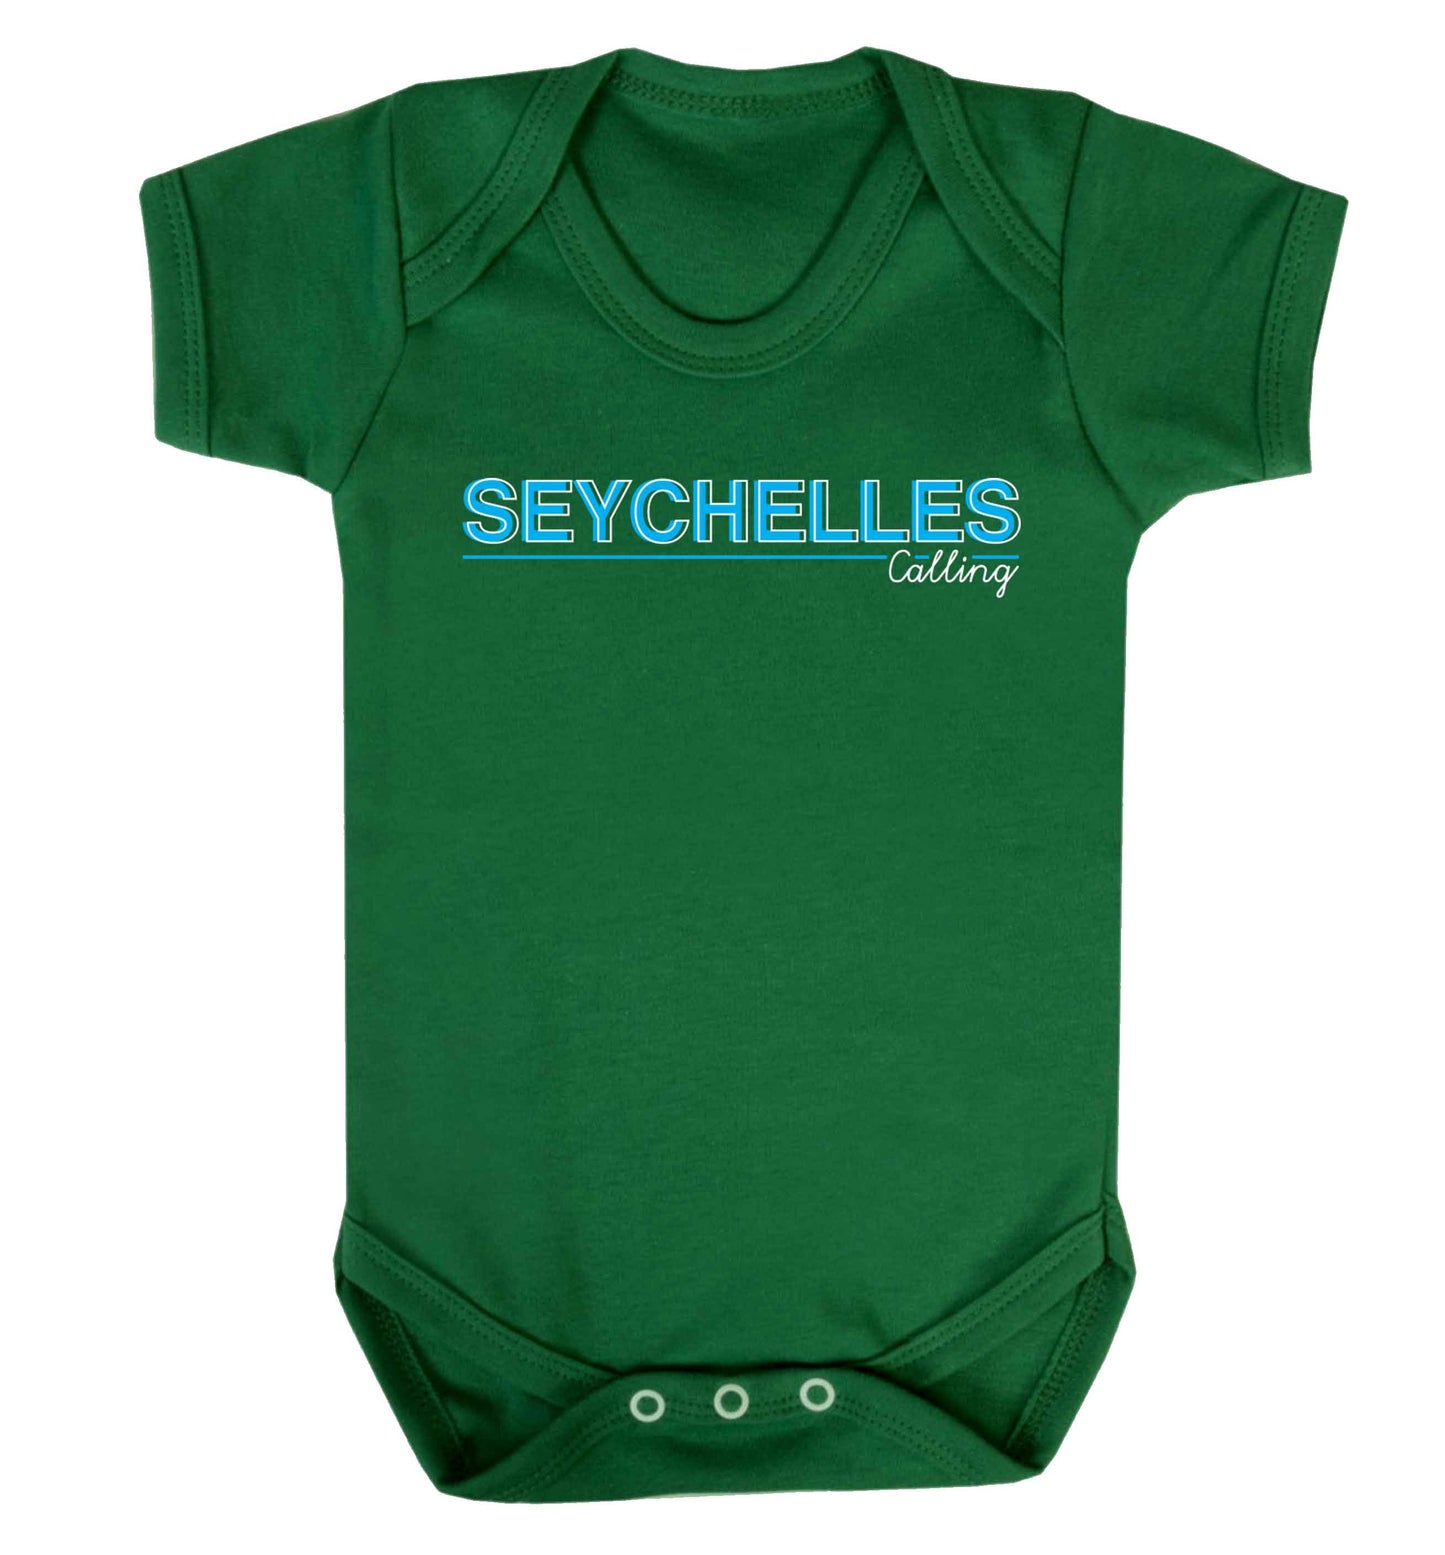 Seychelles calling Baby Vest green 18-24 months